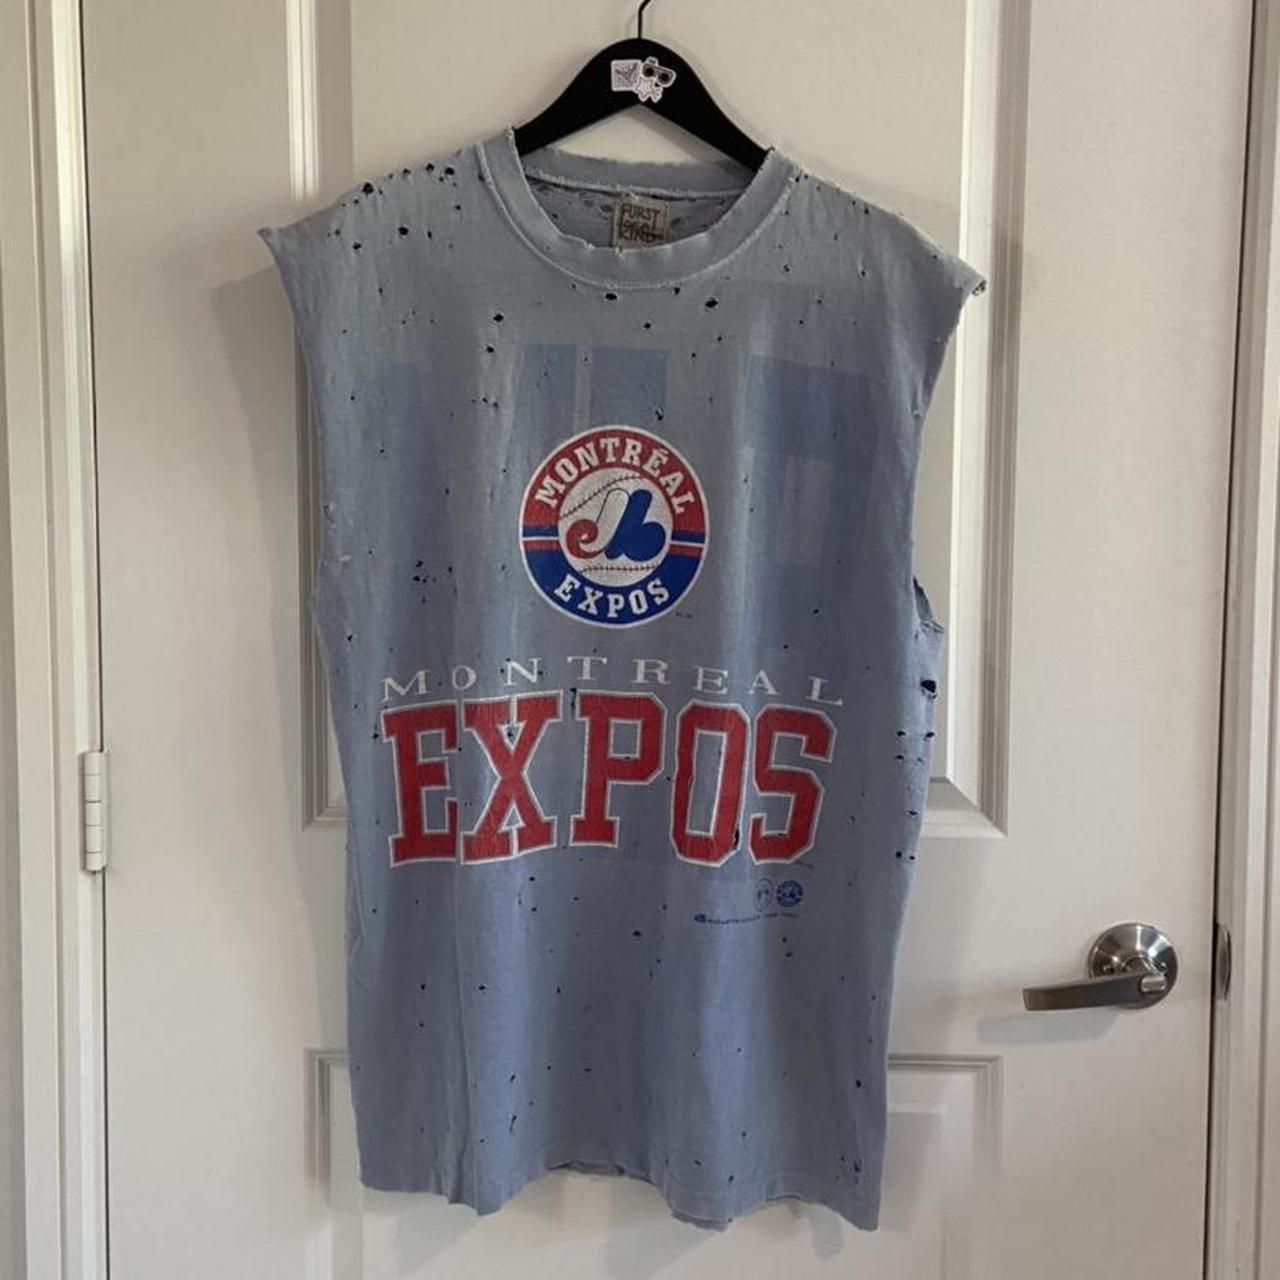 Montreal Expos Cut Off T-Shirt #90s #vintage #grunge - Depop